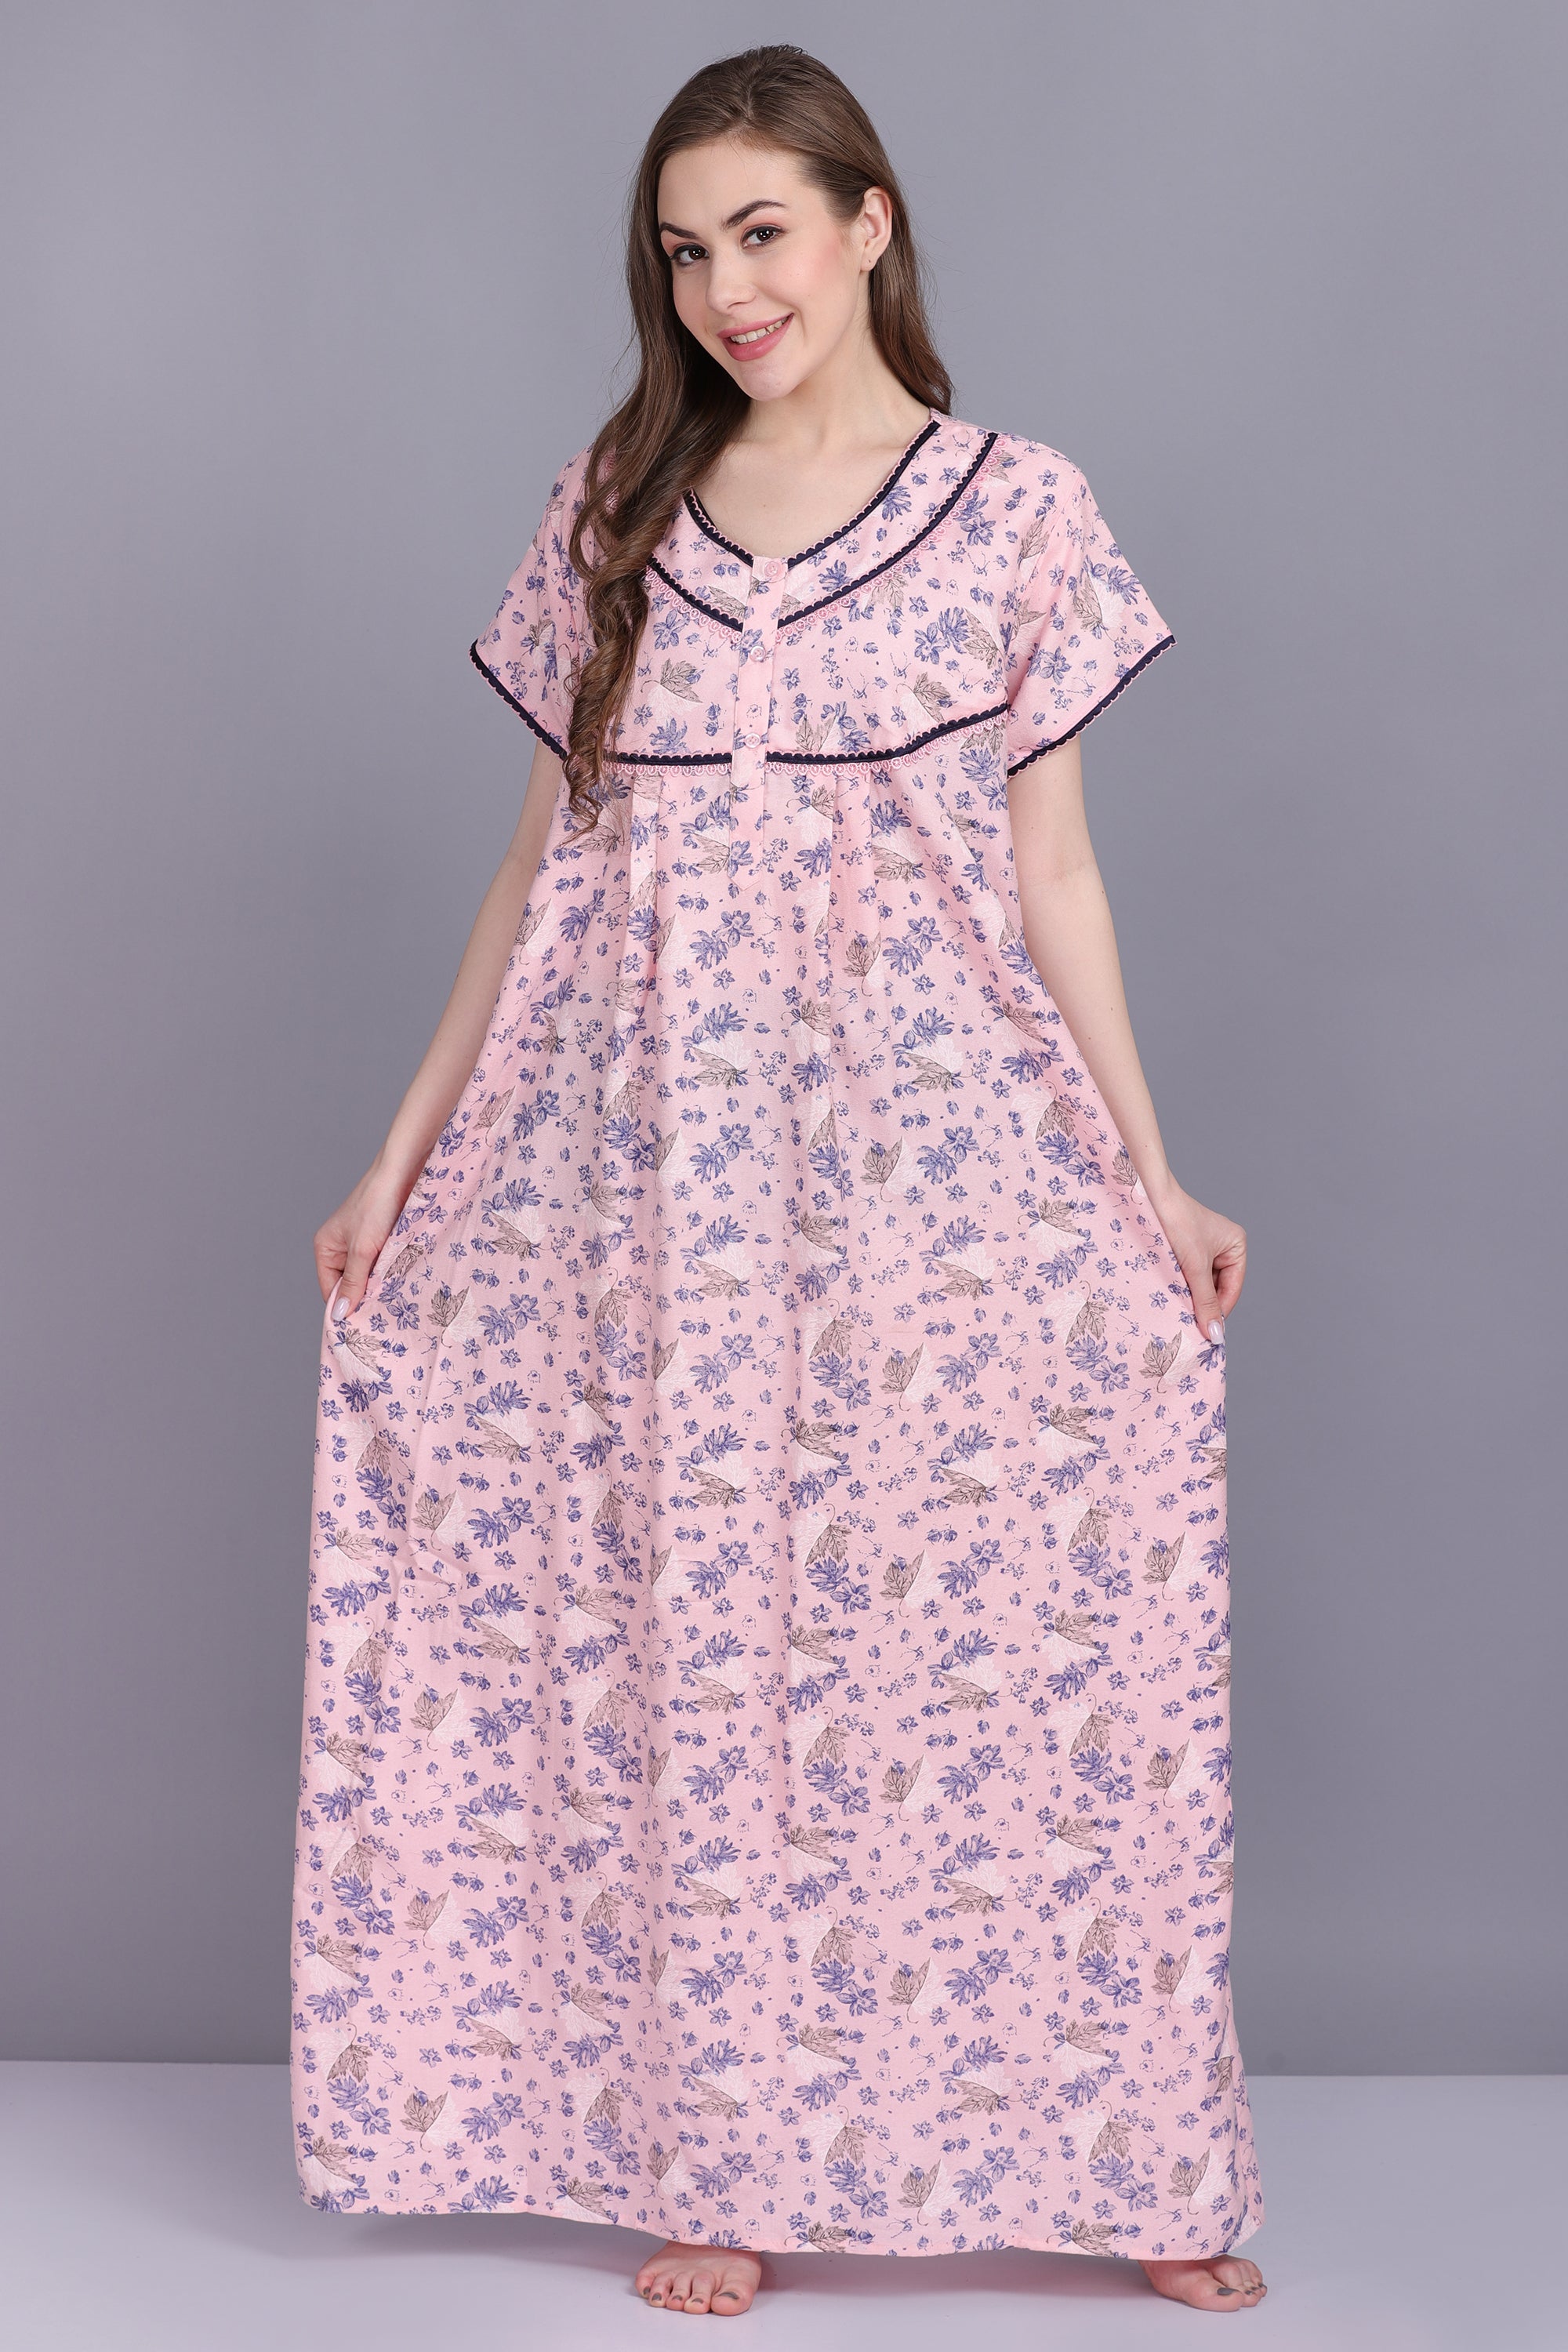 Brown Circles Hand-Dyed Batik Cotton Night Gown – thekaftanshop.com